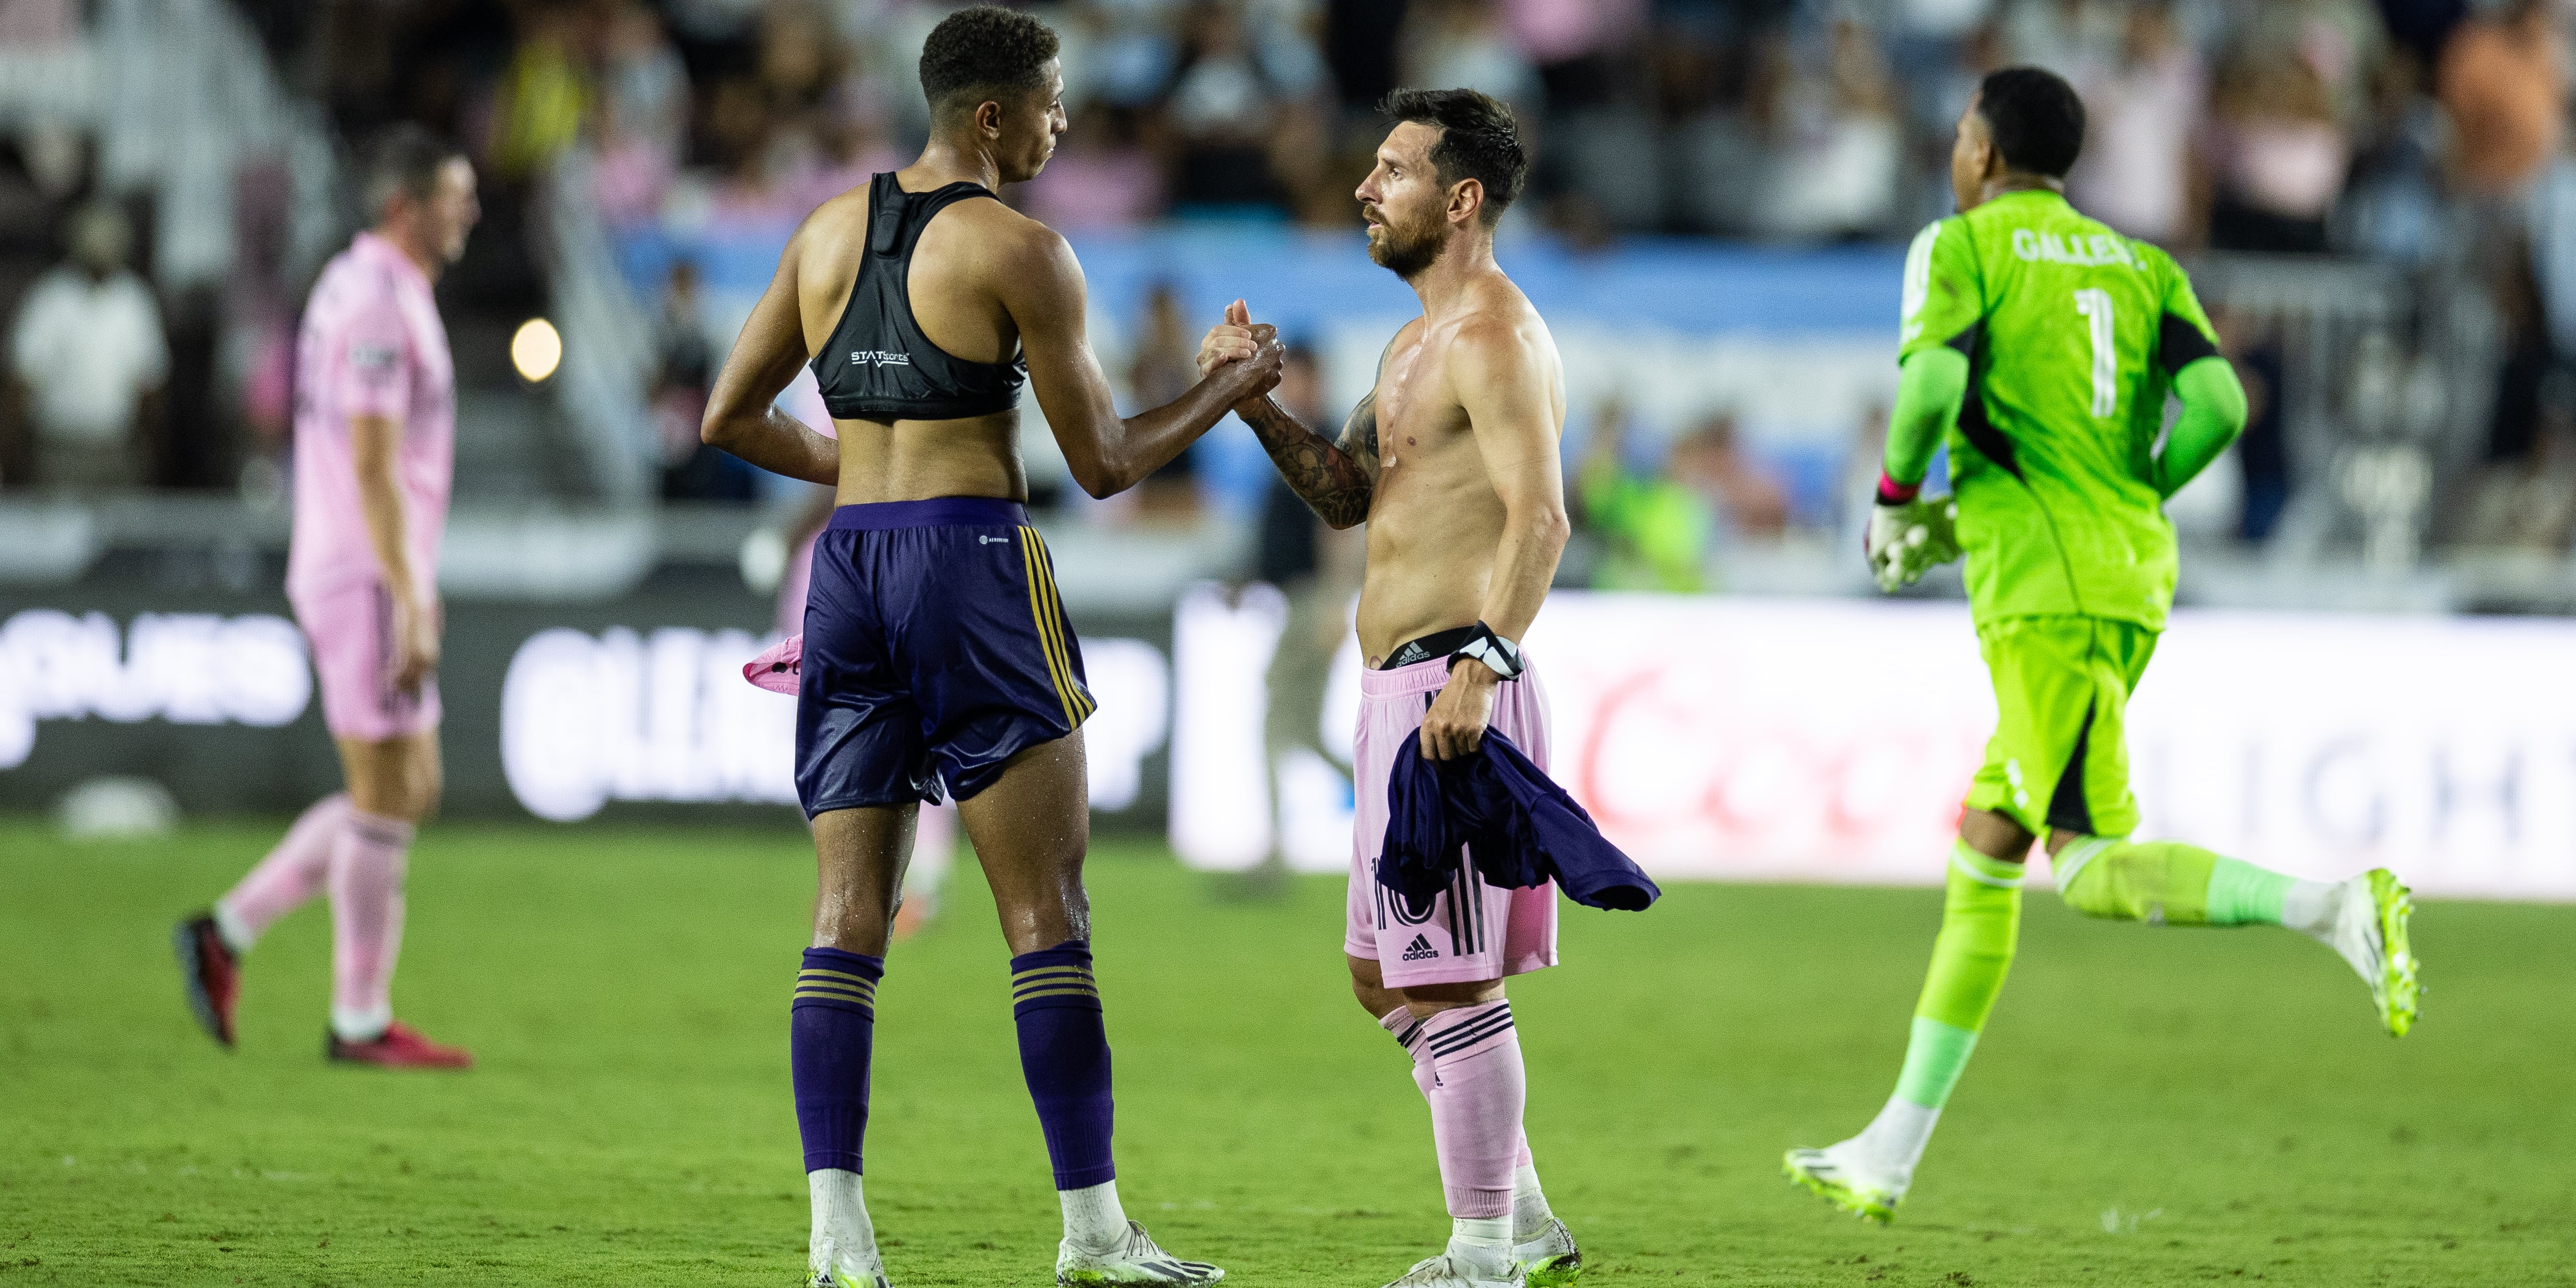 Why Do Men's Soccer Players Wear Sports Bras?